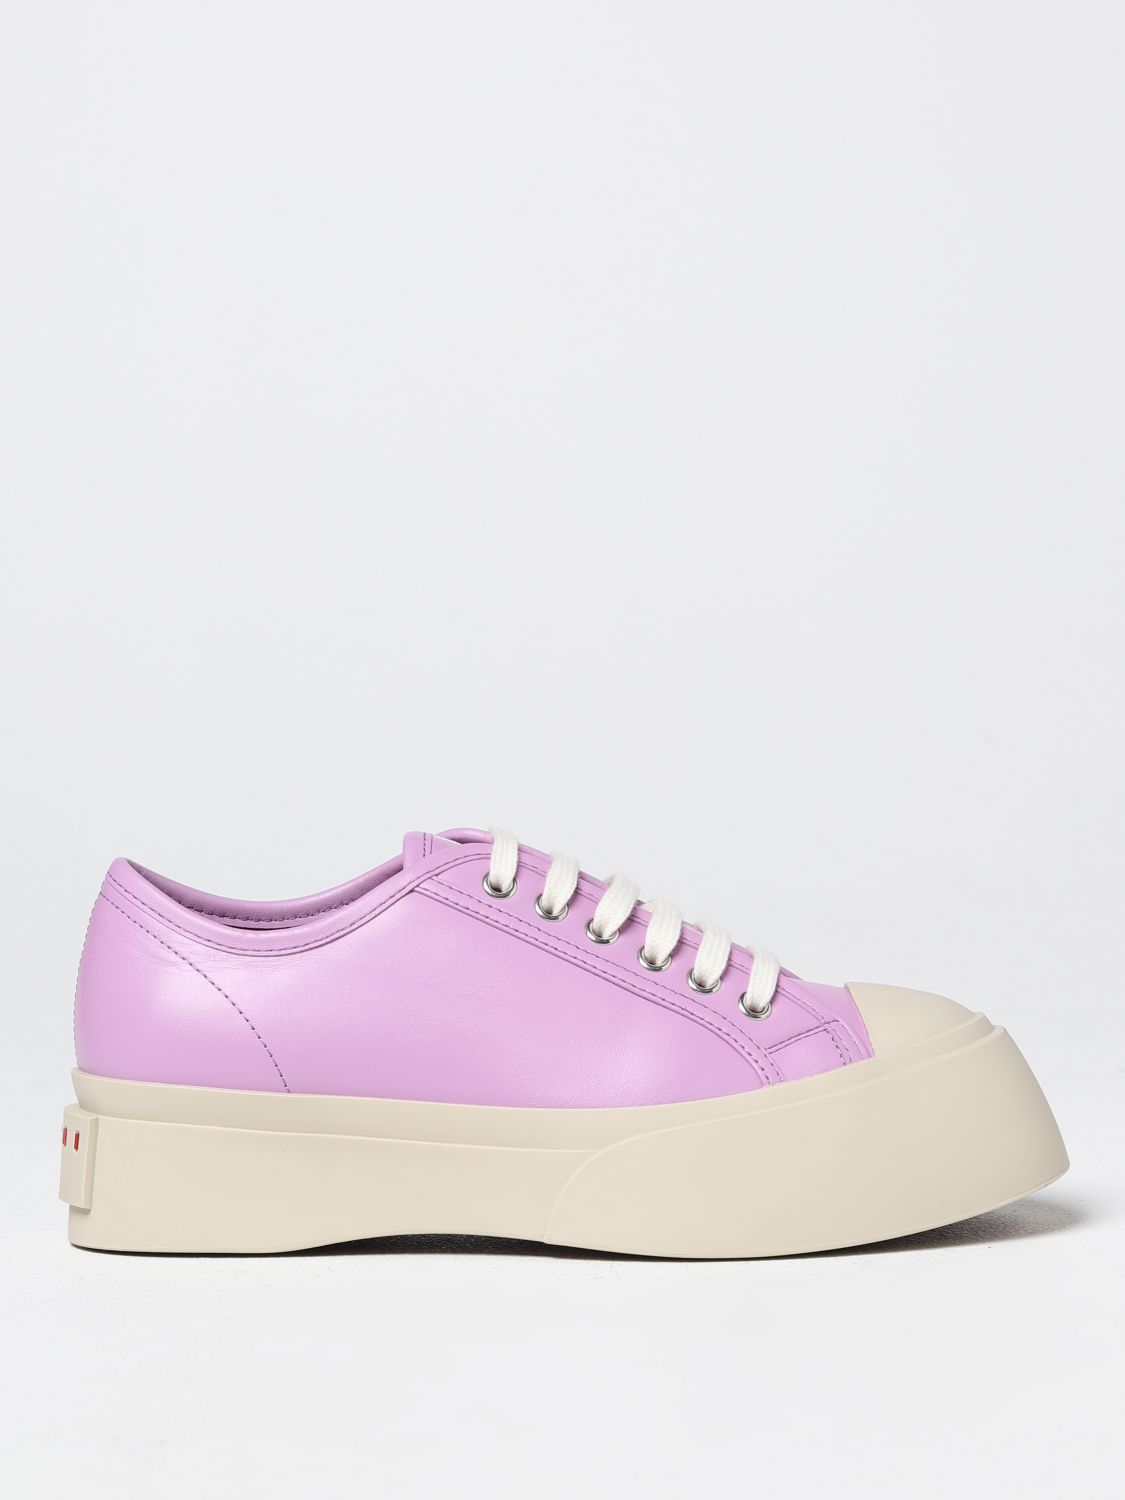 Marni Leather Sneaker In Lilac